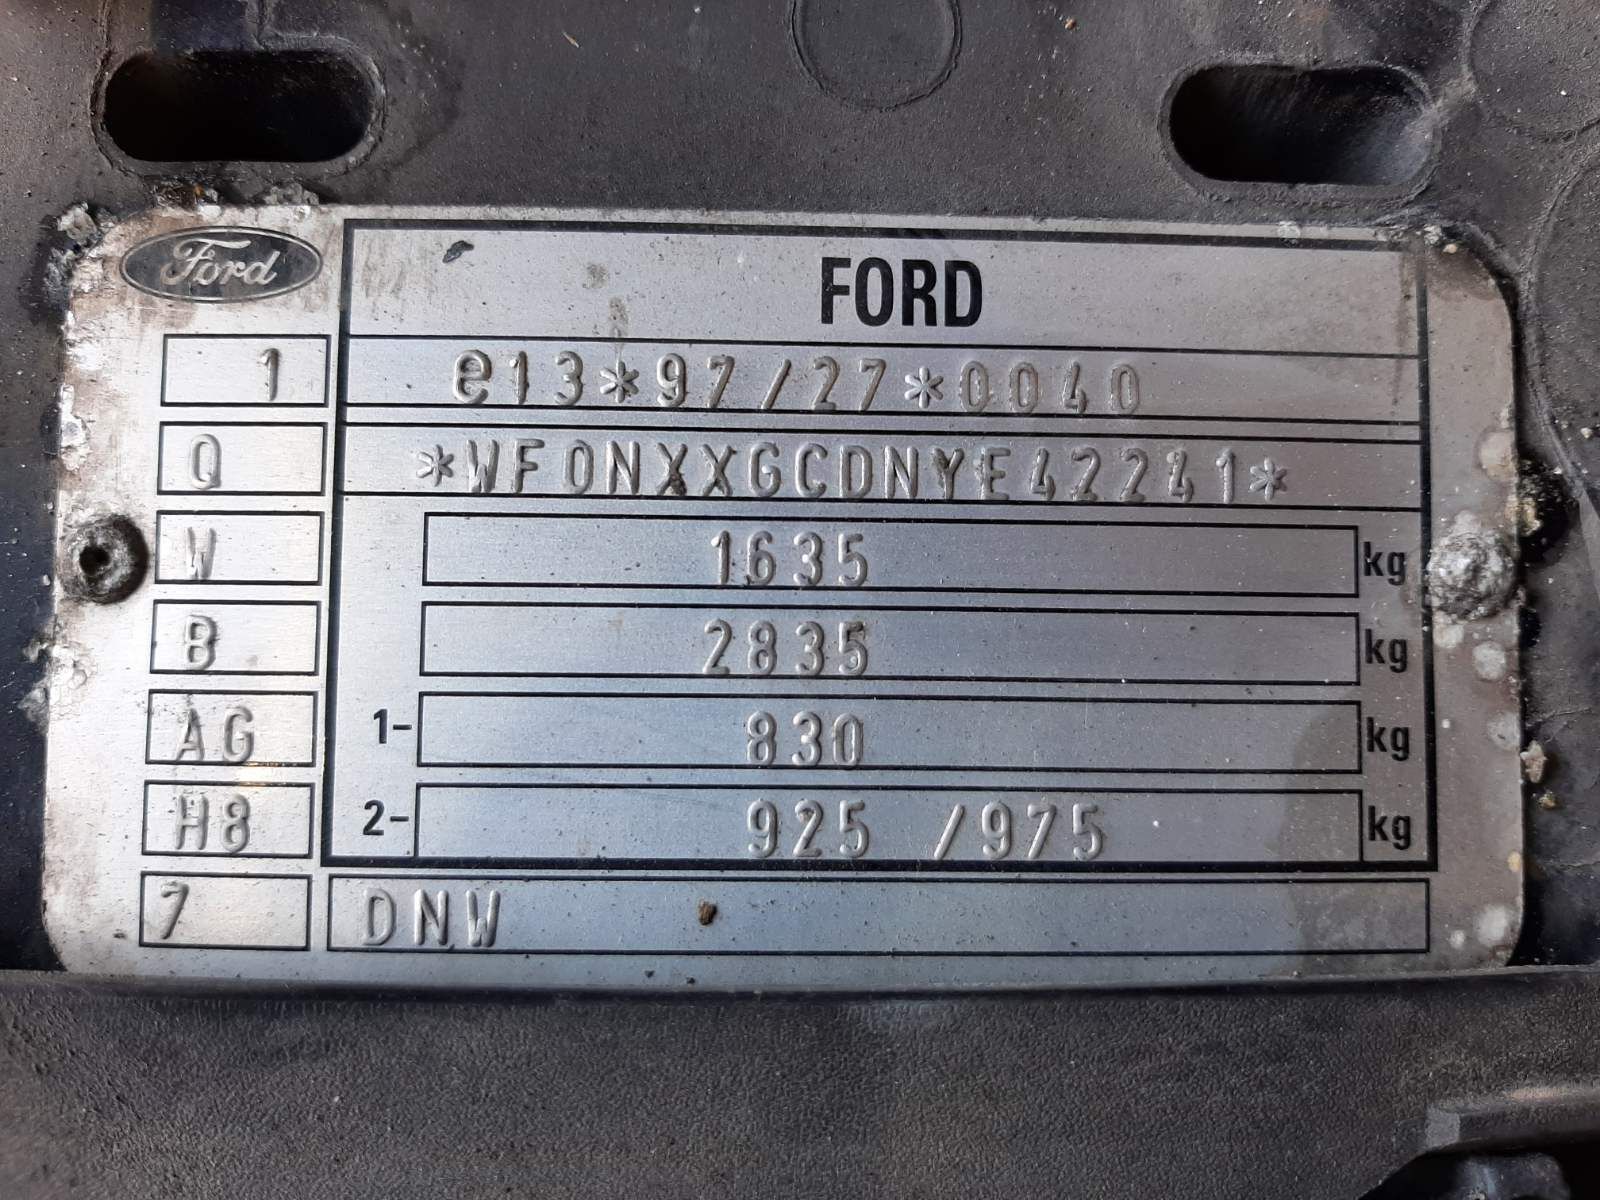 Б/У 1107182 Ручка двери наружная передняя левая Ford Focus 1 (1998-2005) без скелета Проверочный сро bu6a1474261 Б/У запчасти